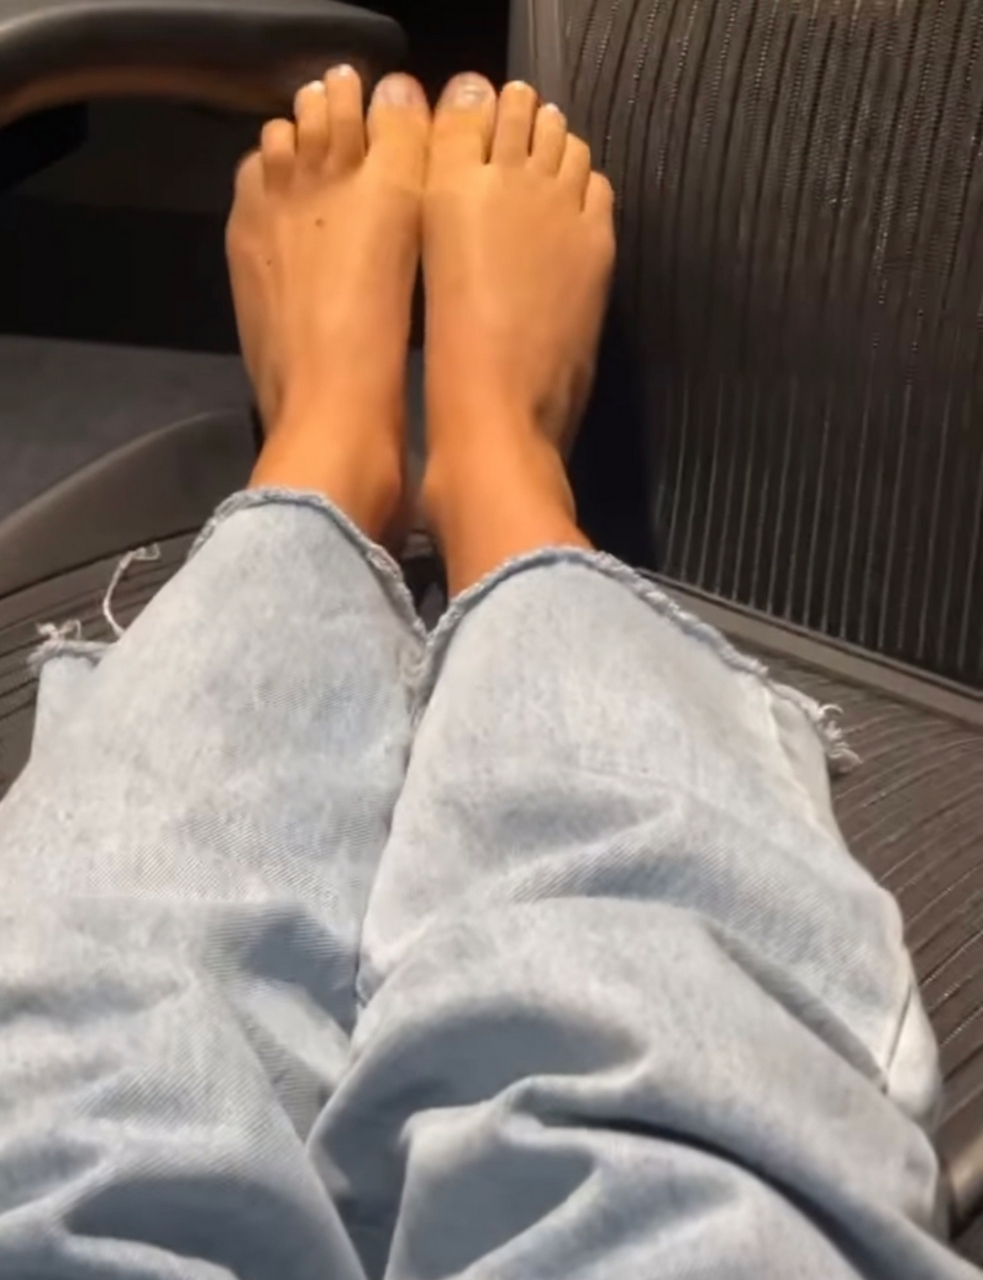 Olivia Neill Feet